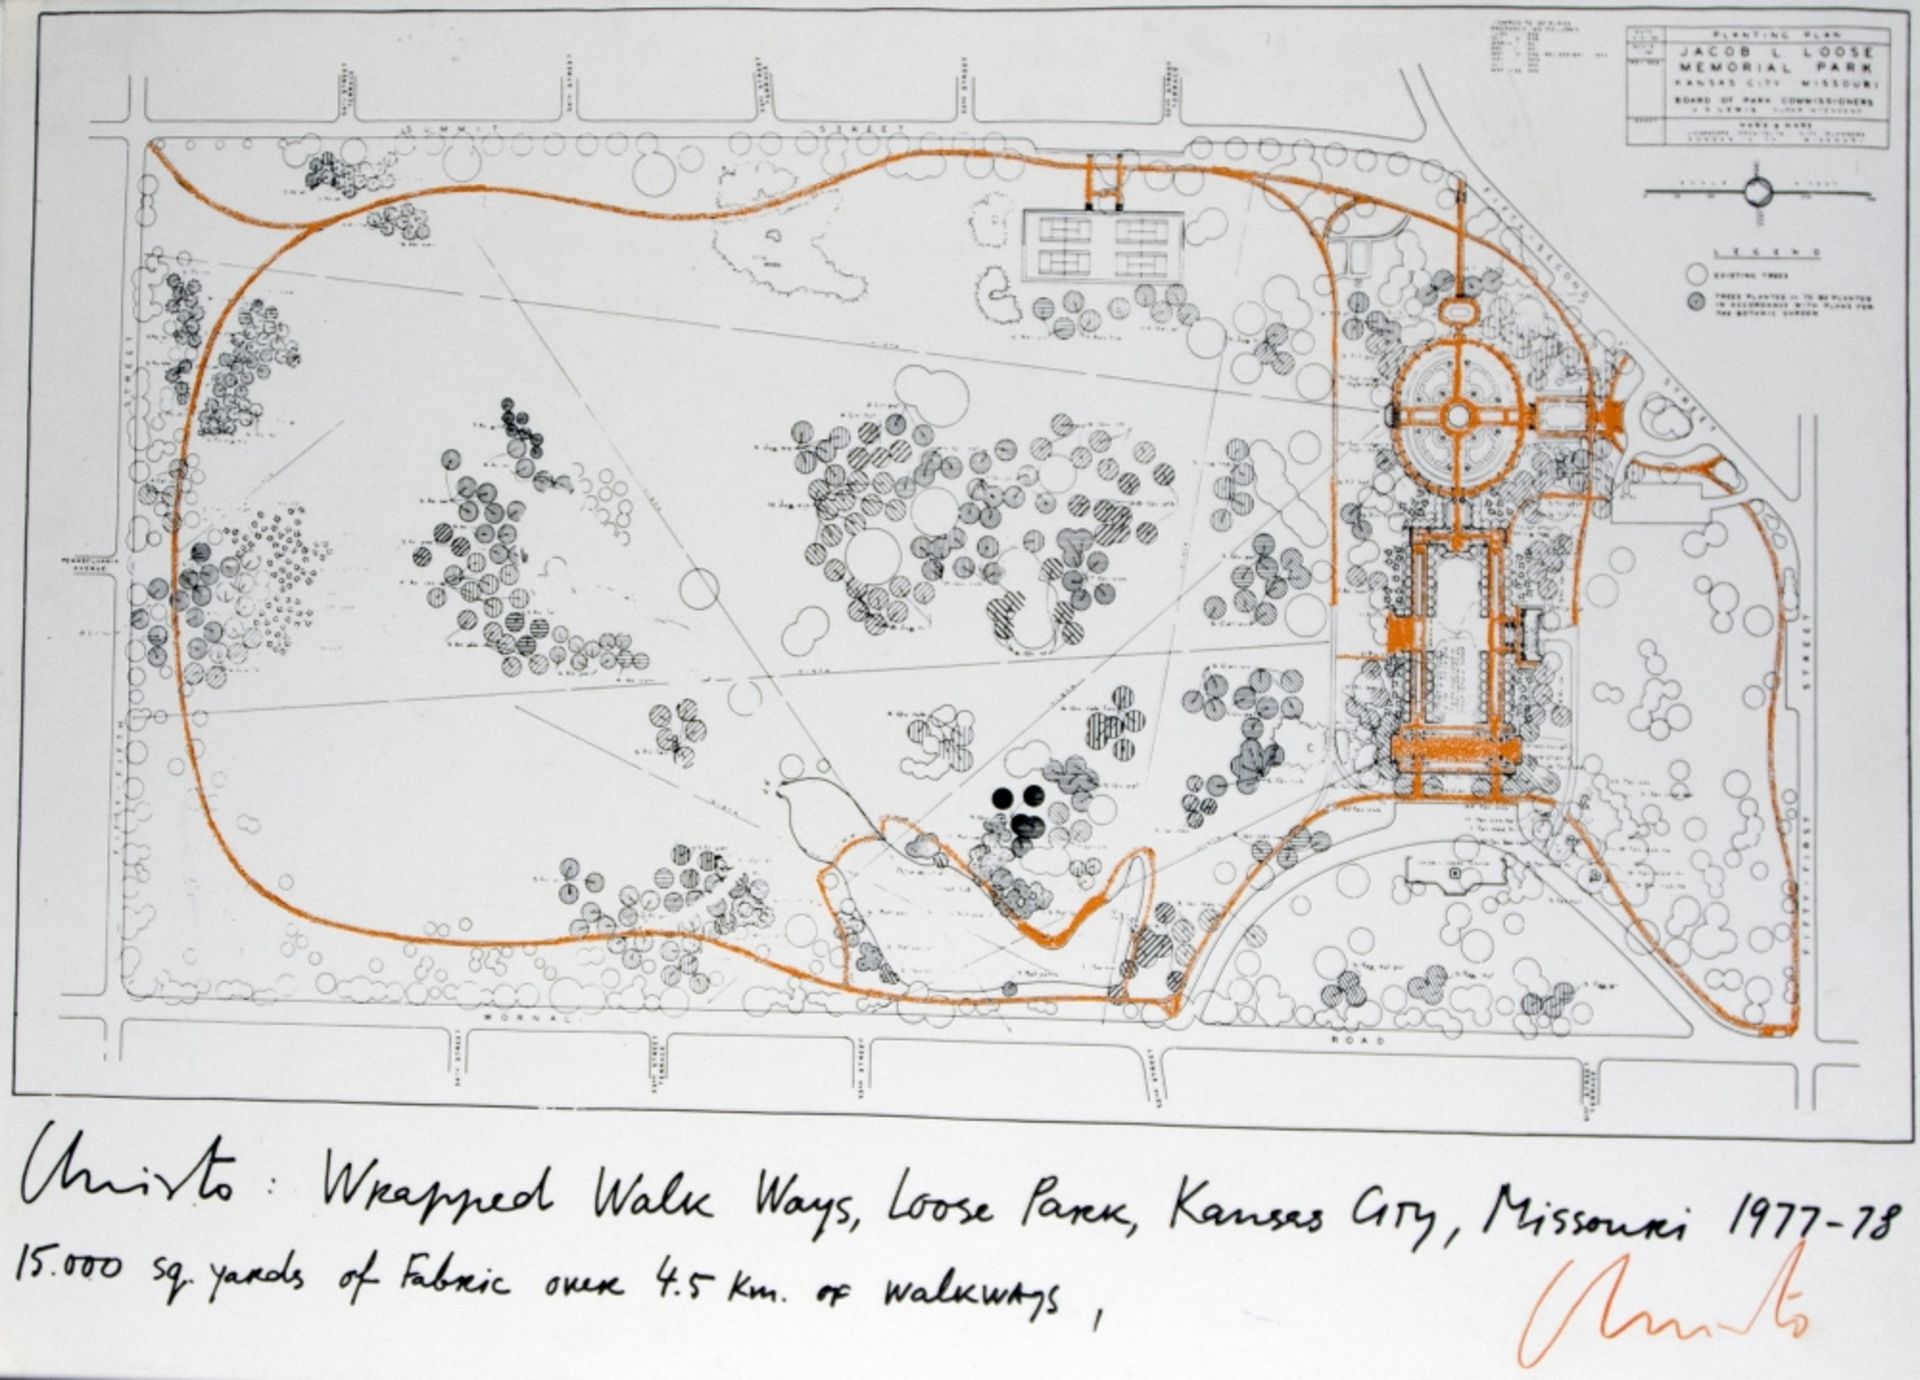 Christo und Jeanne-Claude:  Wrapped walk ways, Loose Park, Kansas City, Missouri 1977-78